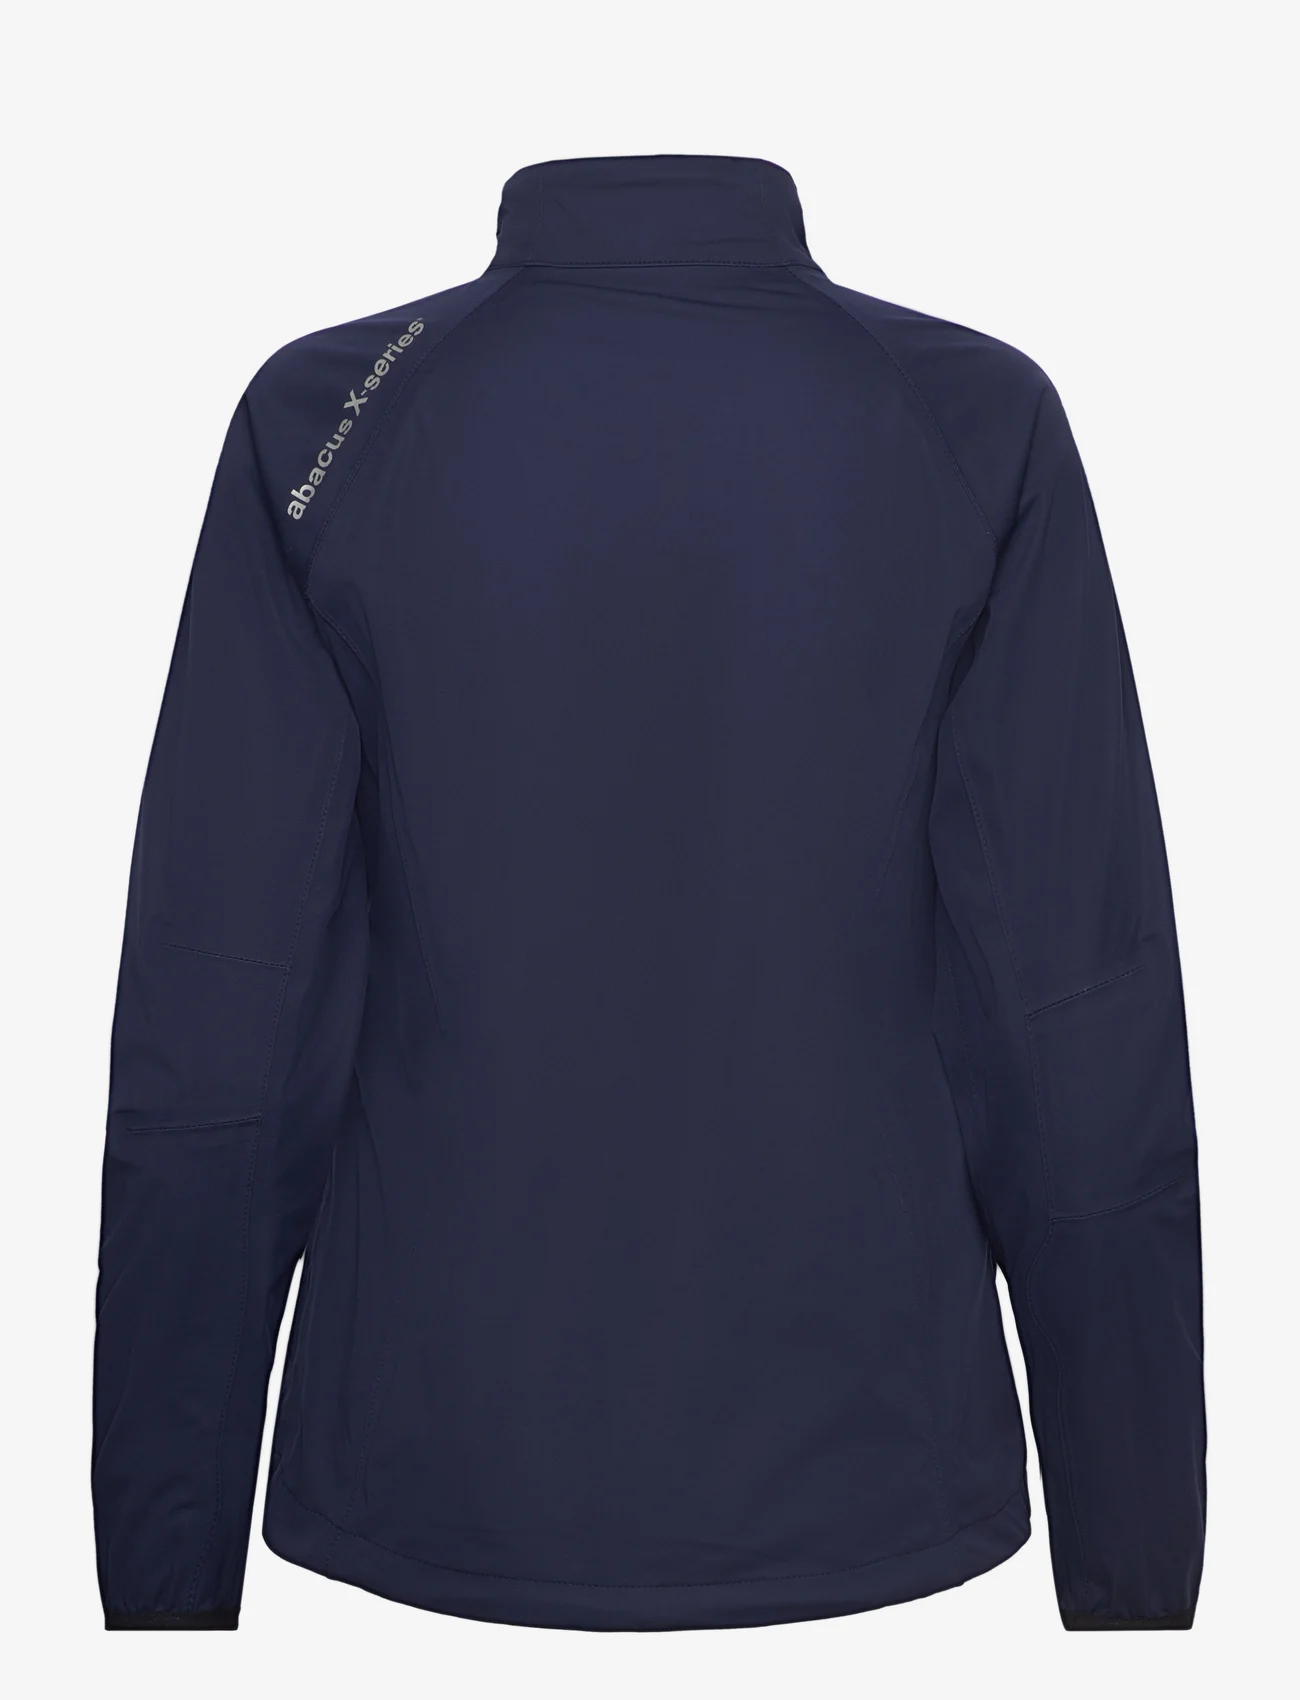 Abacus - Lds PDX waterproof jacket - golfjassen - midnight navy - 1